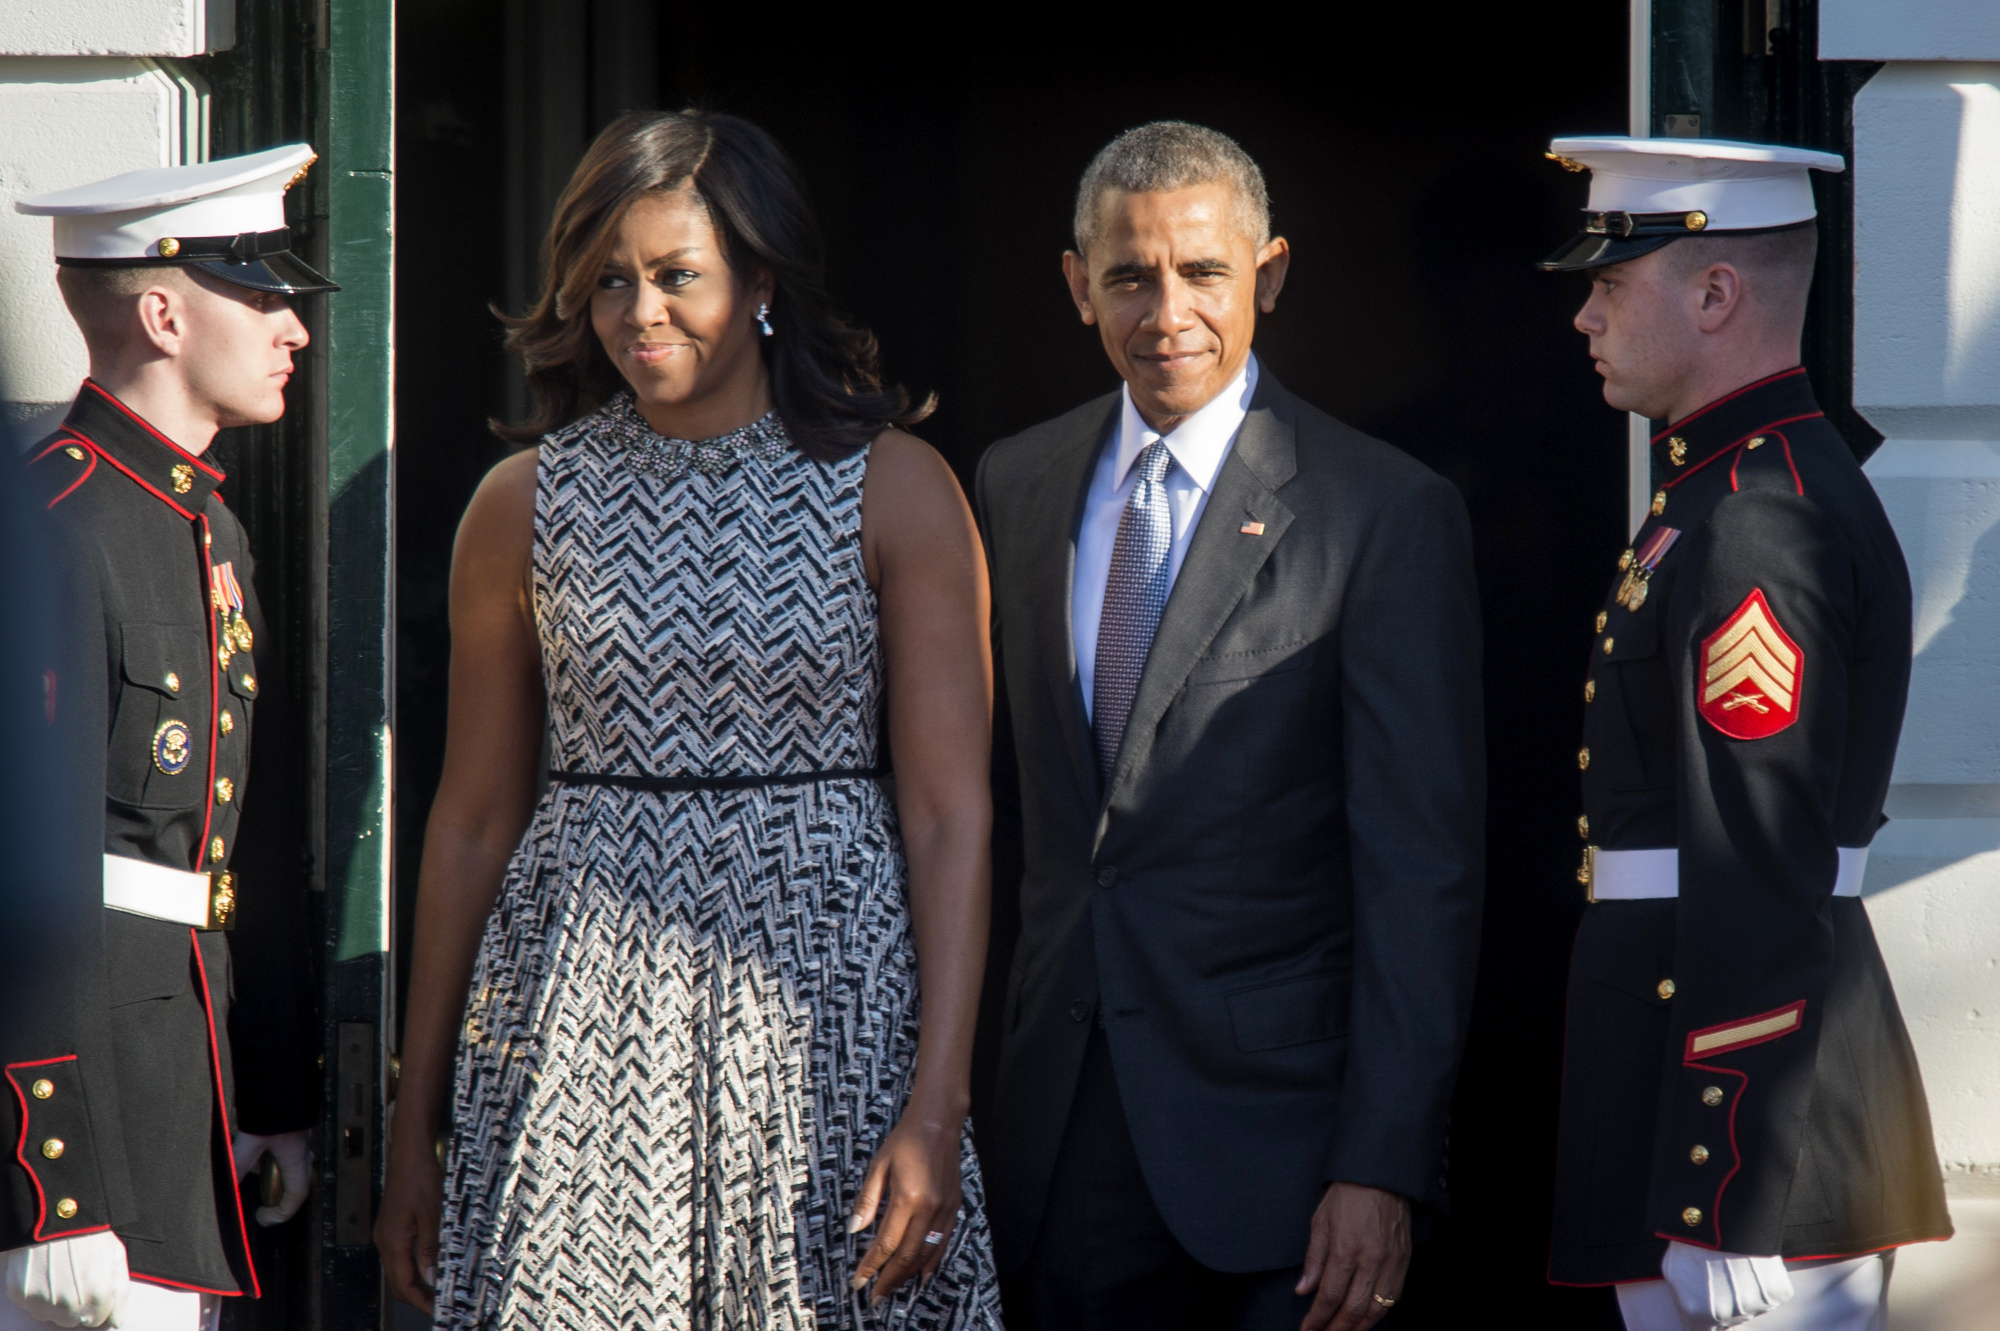 Former First Lady Michelle Obama and former President Barack Obama